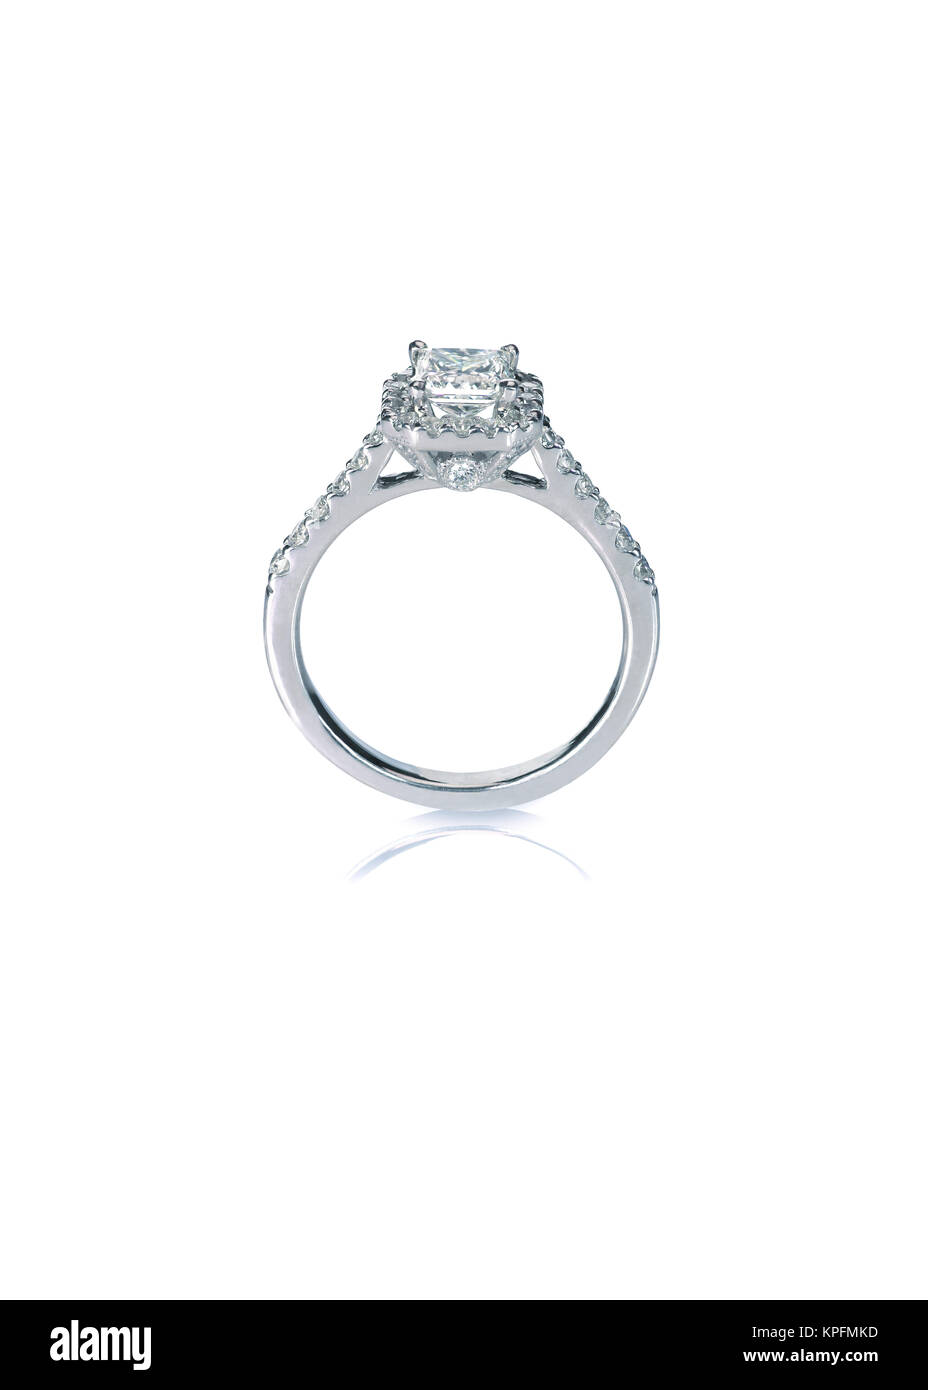 Beautiful Diamond Wedding band engagement ring side view Stock Photo - Alamy